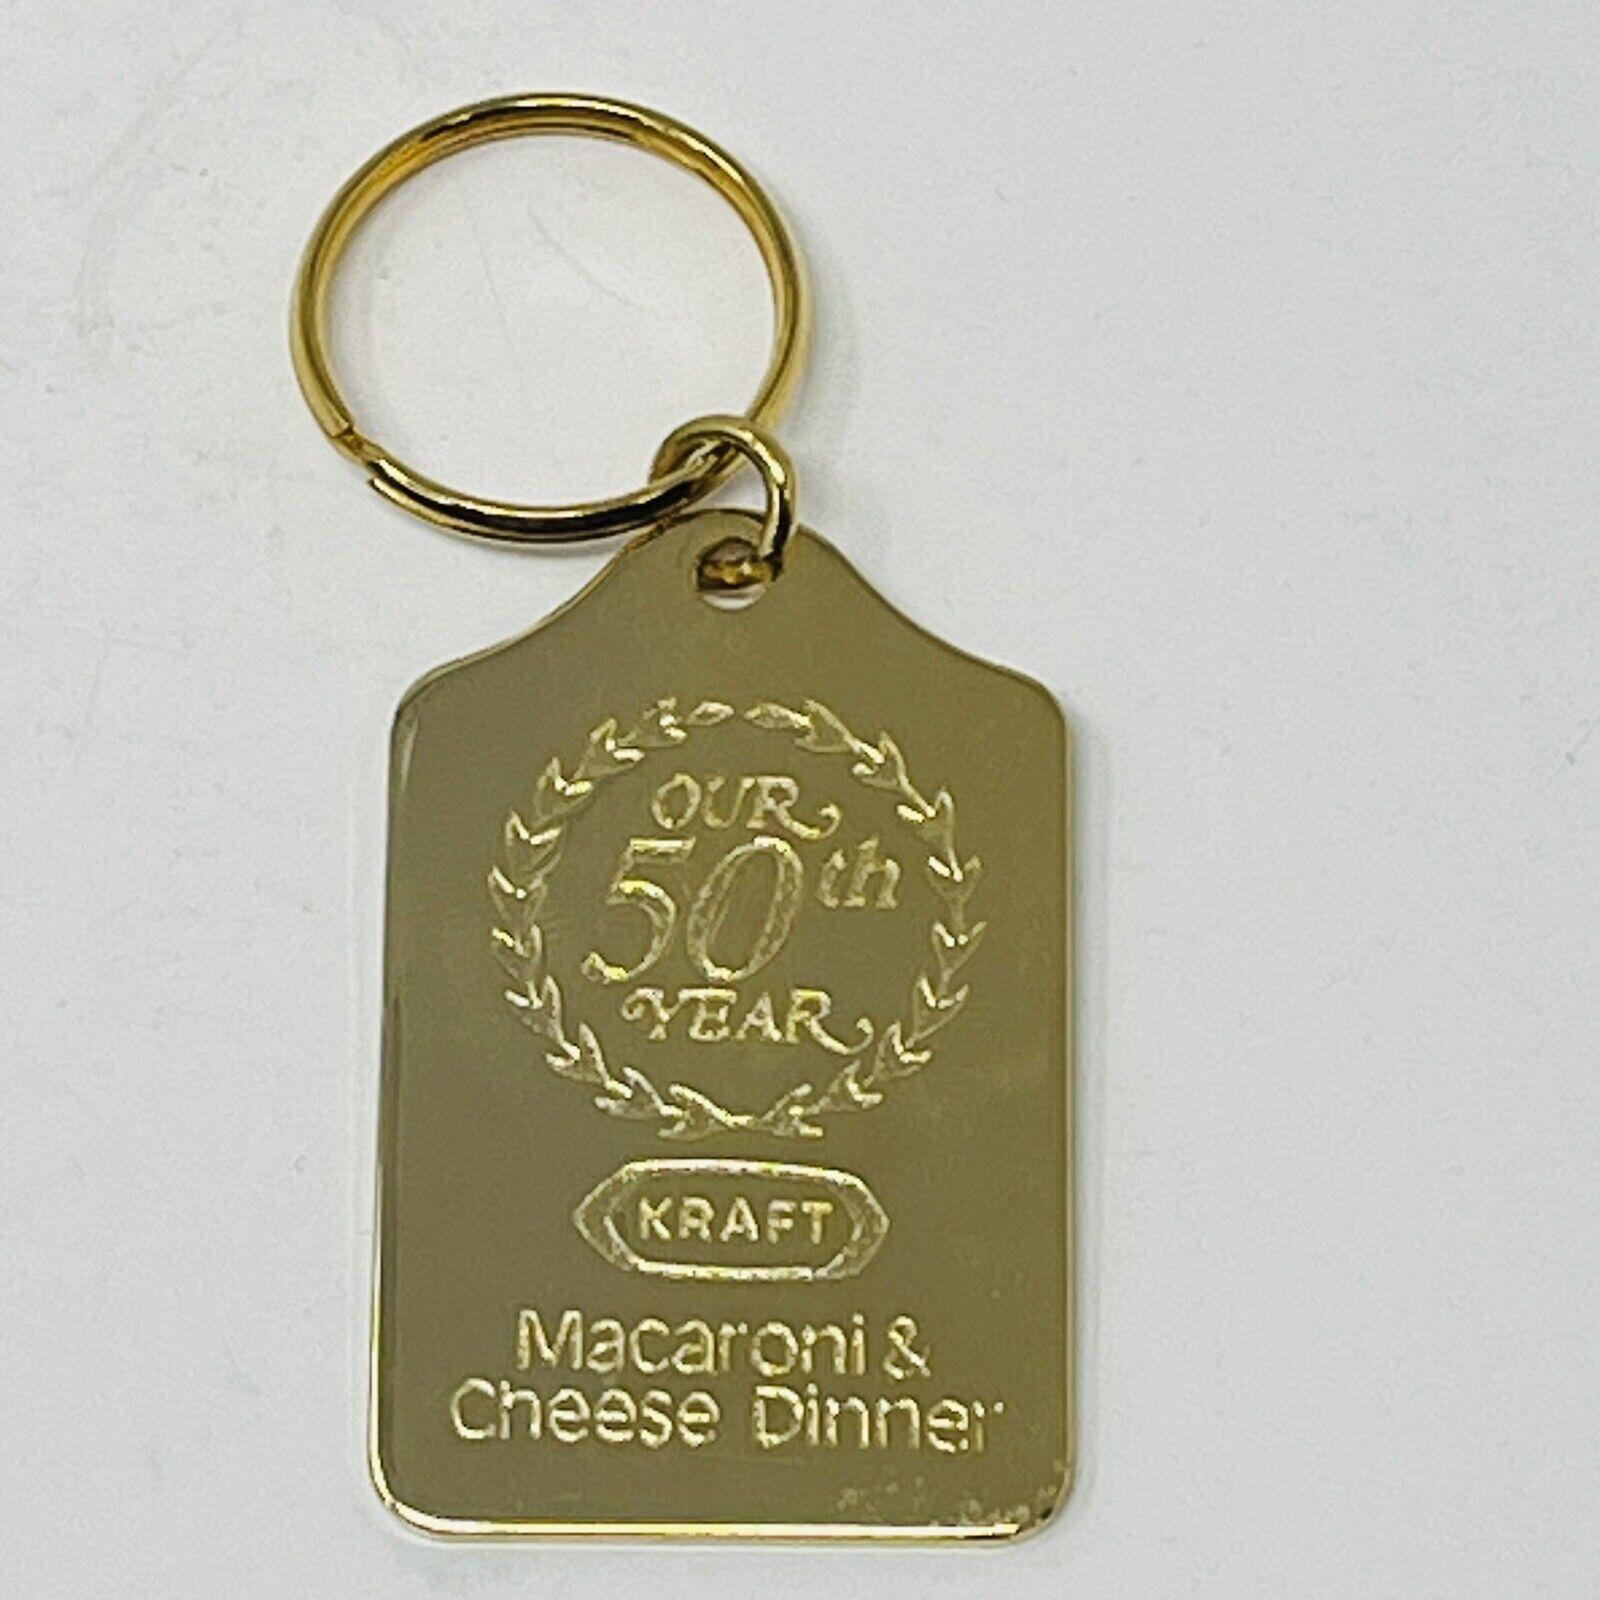 1987 Kraft Key Ring Macaroni & Cheese Dinner Brass Key Chain Our 50th Year